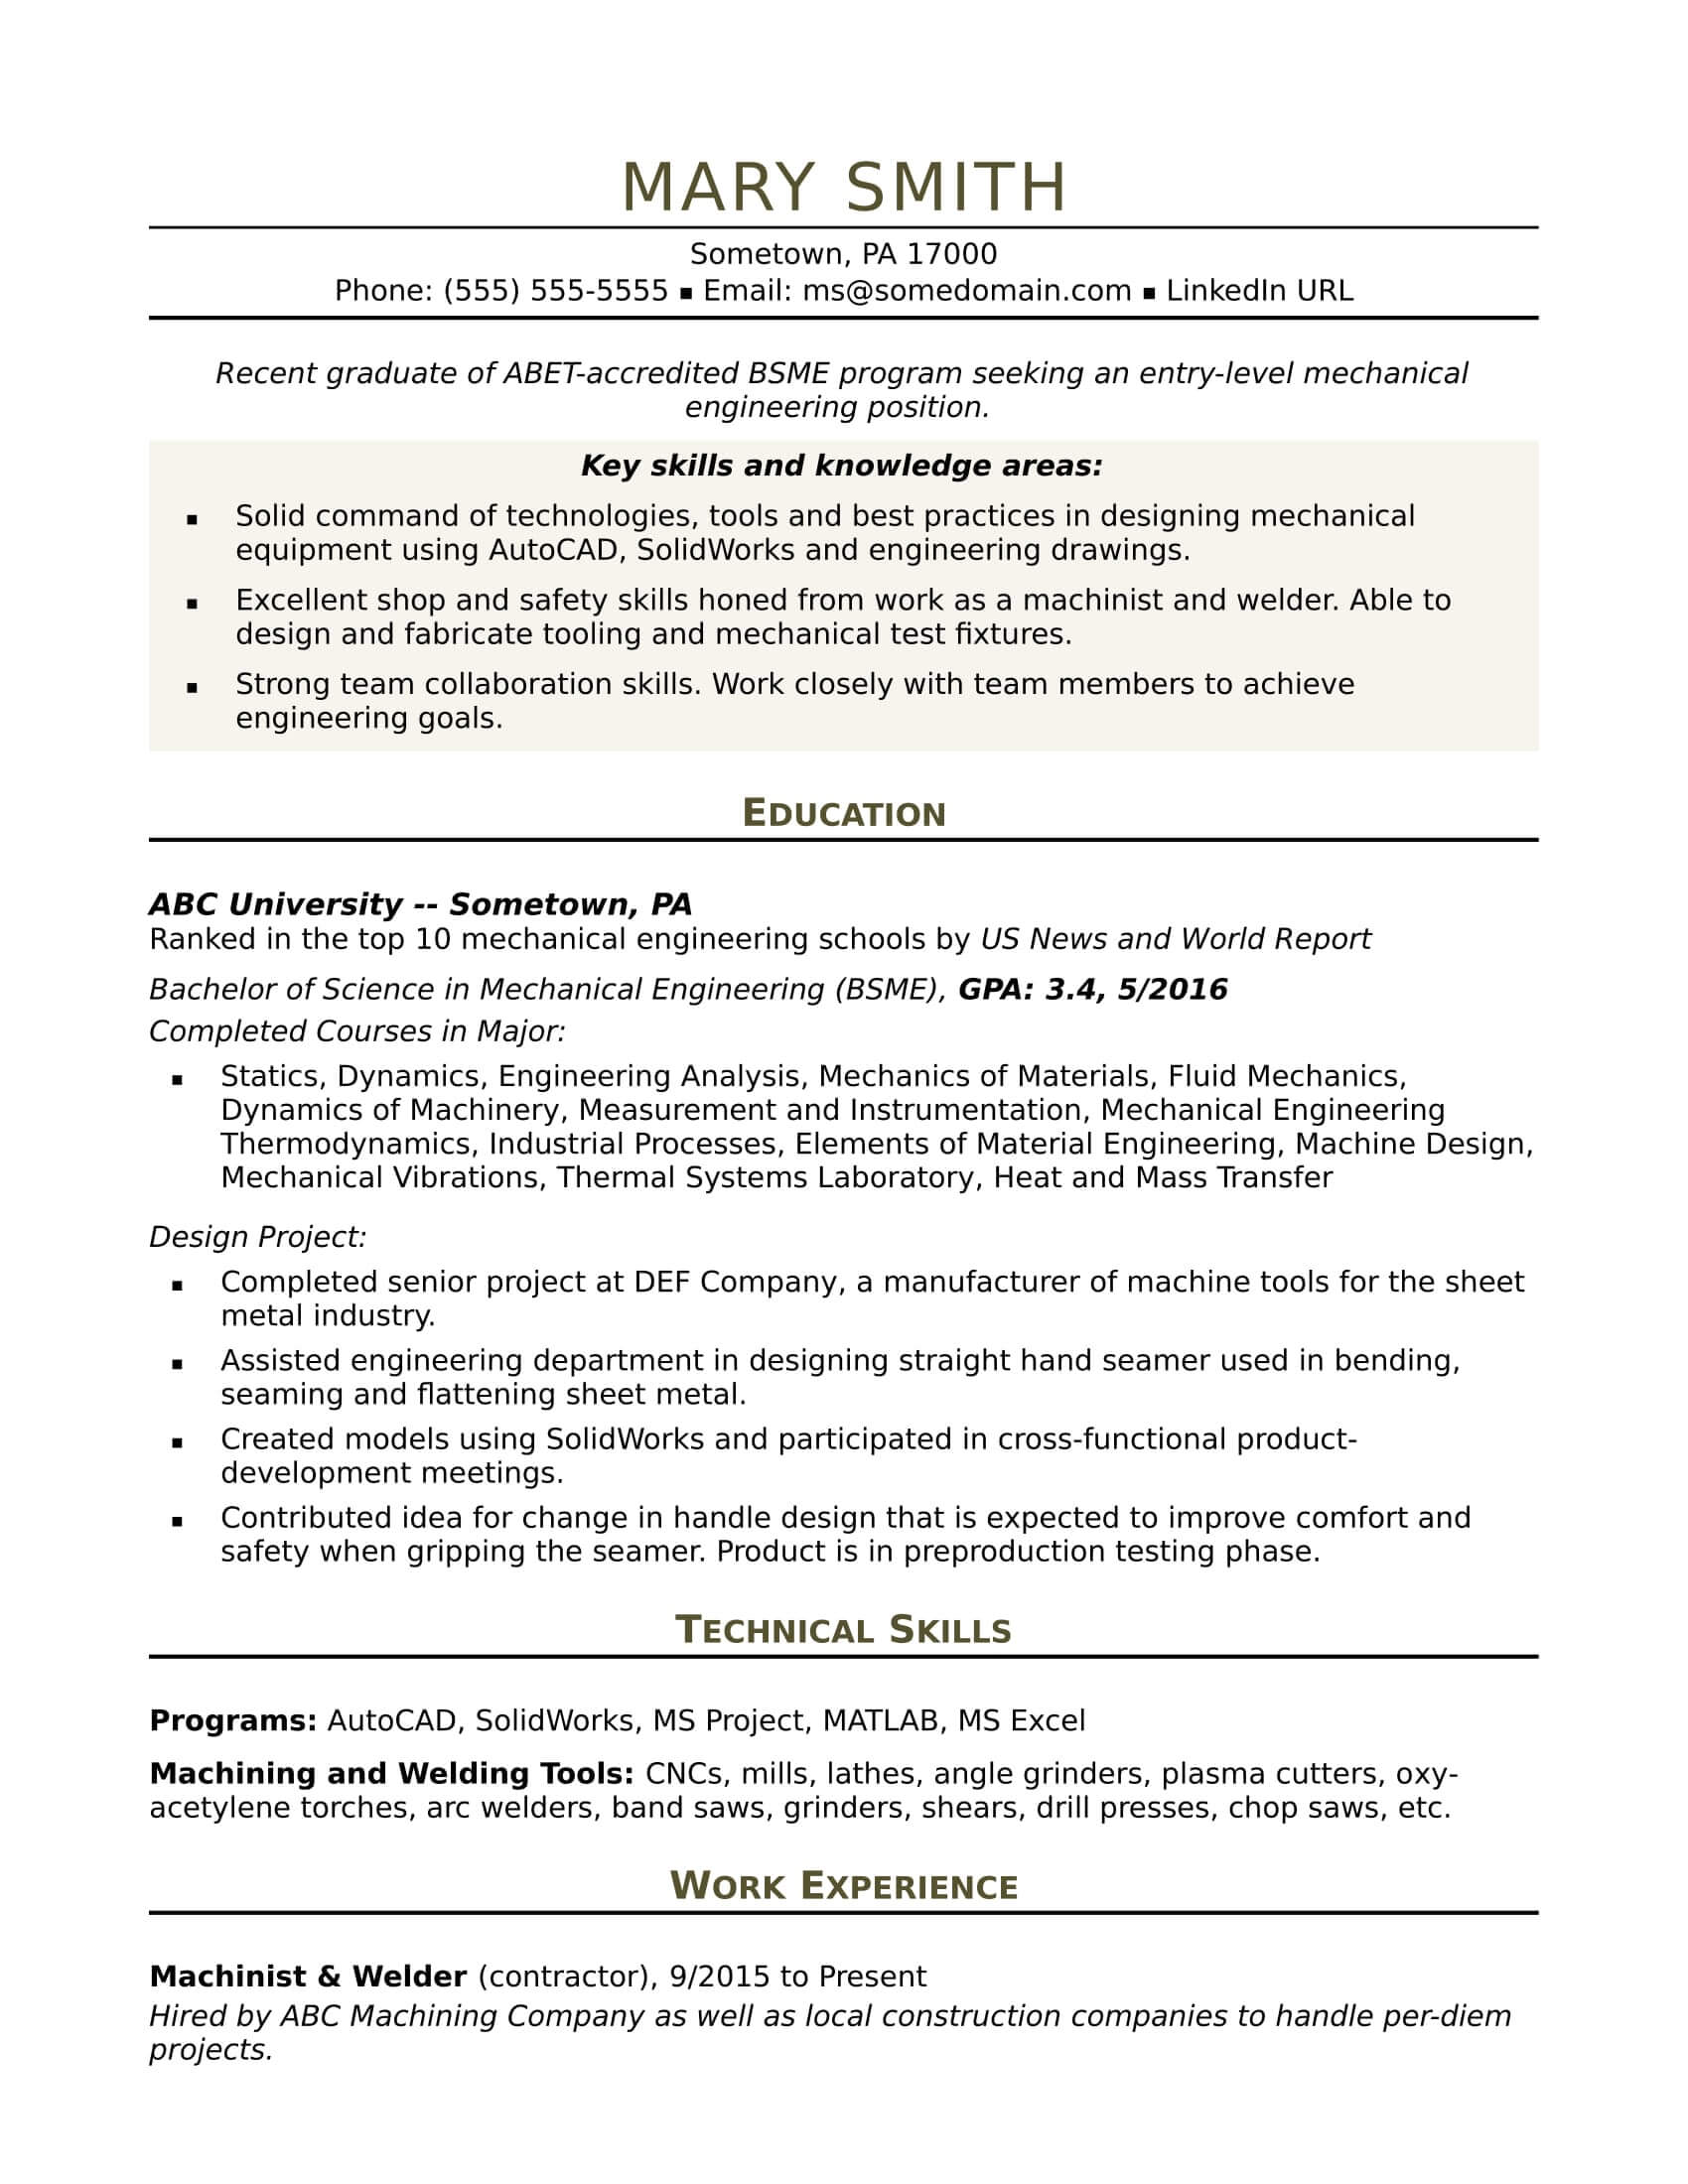 Sample Resume For An Entry Level Mechanical Engineer Regarding Mechanic Job Card Template